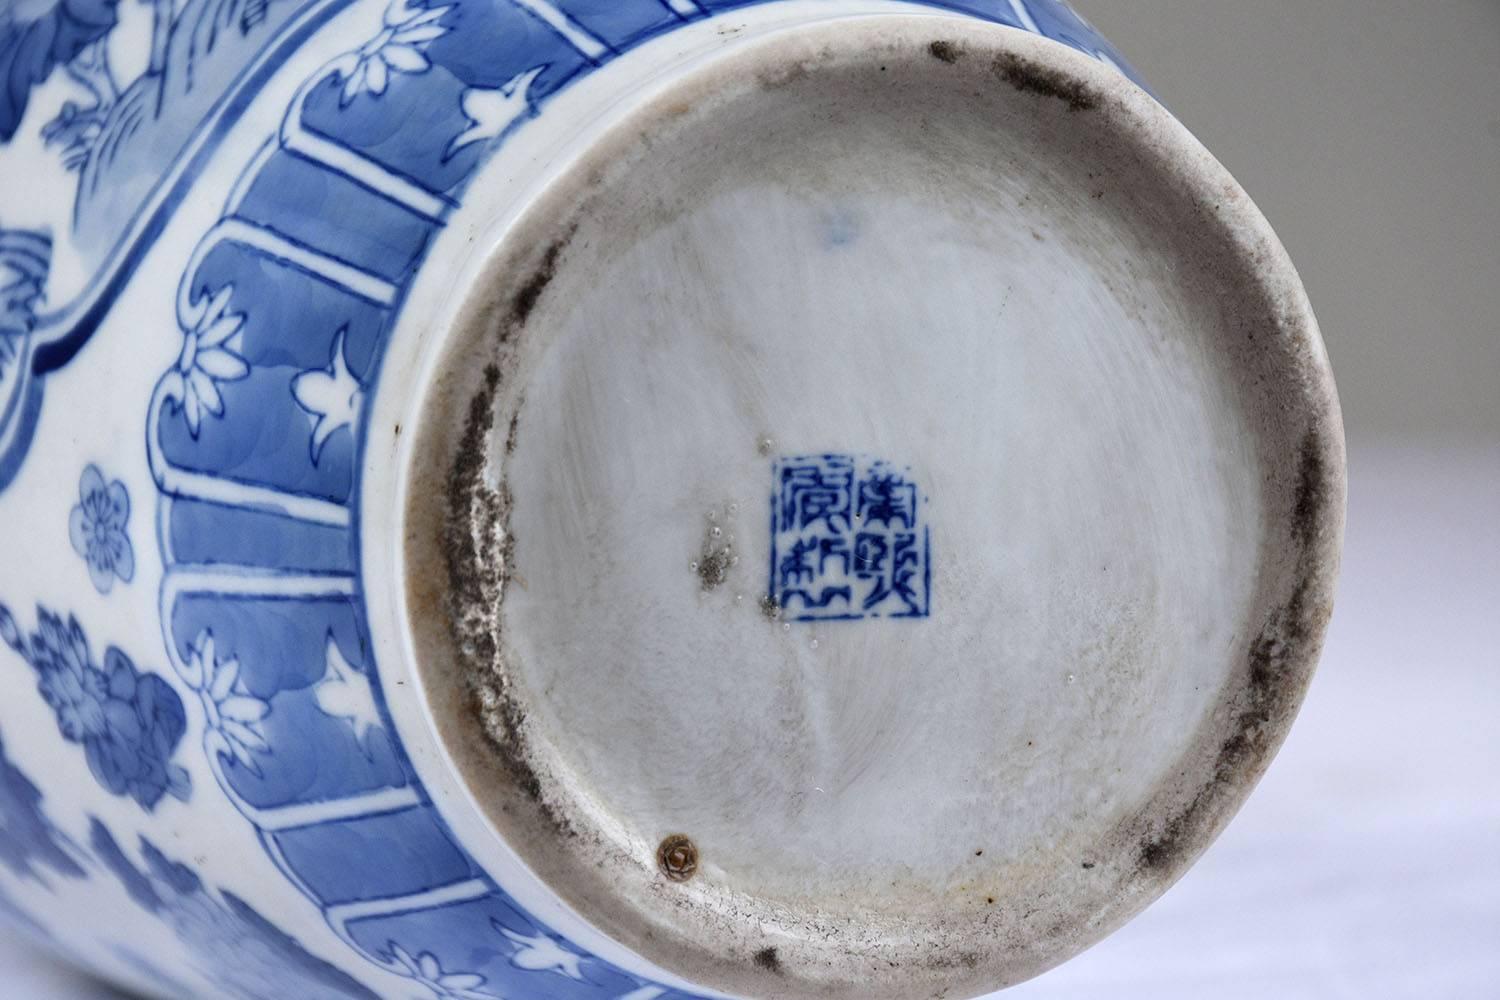 Pair of Chinese Blue and White Ceramic Vases 3